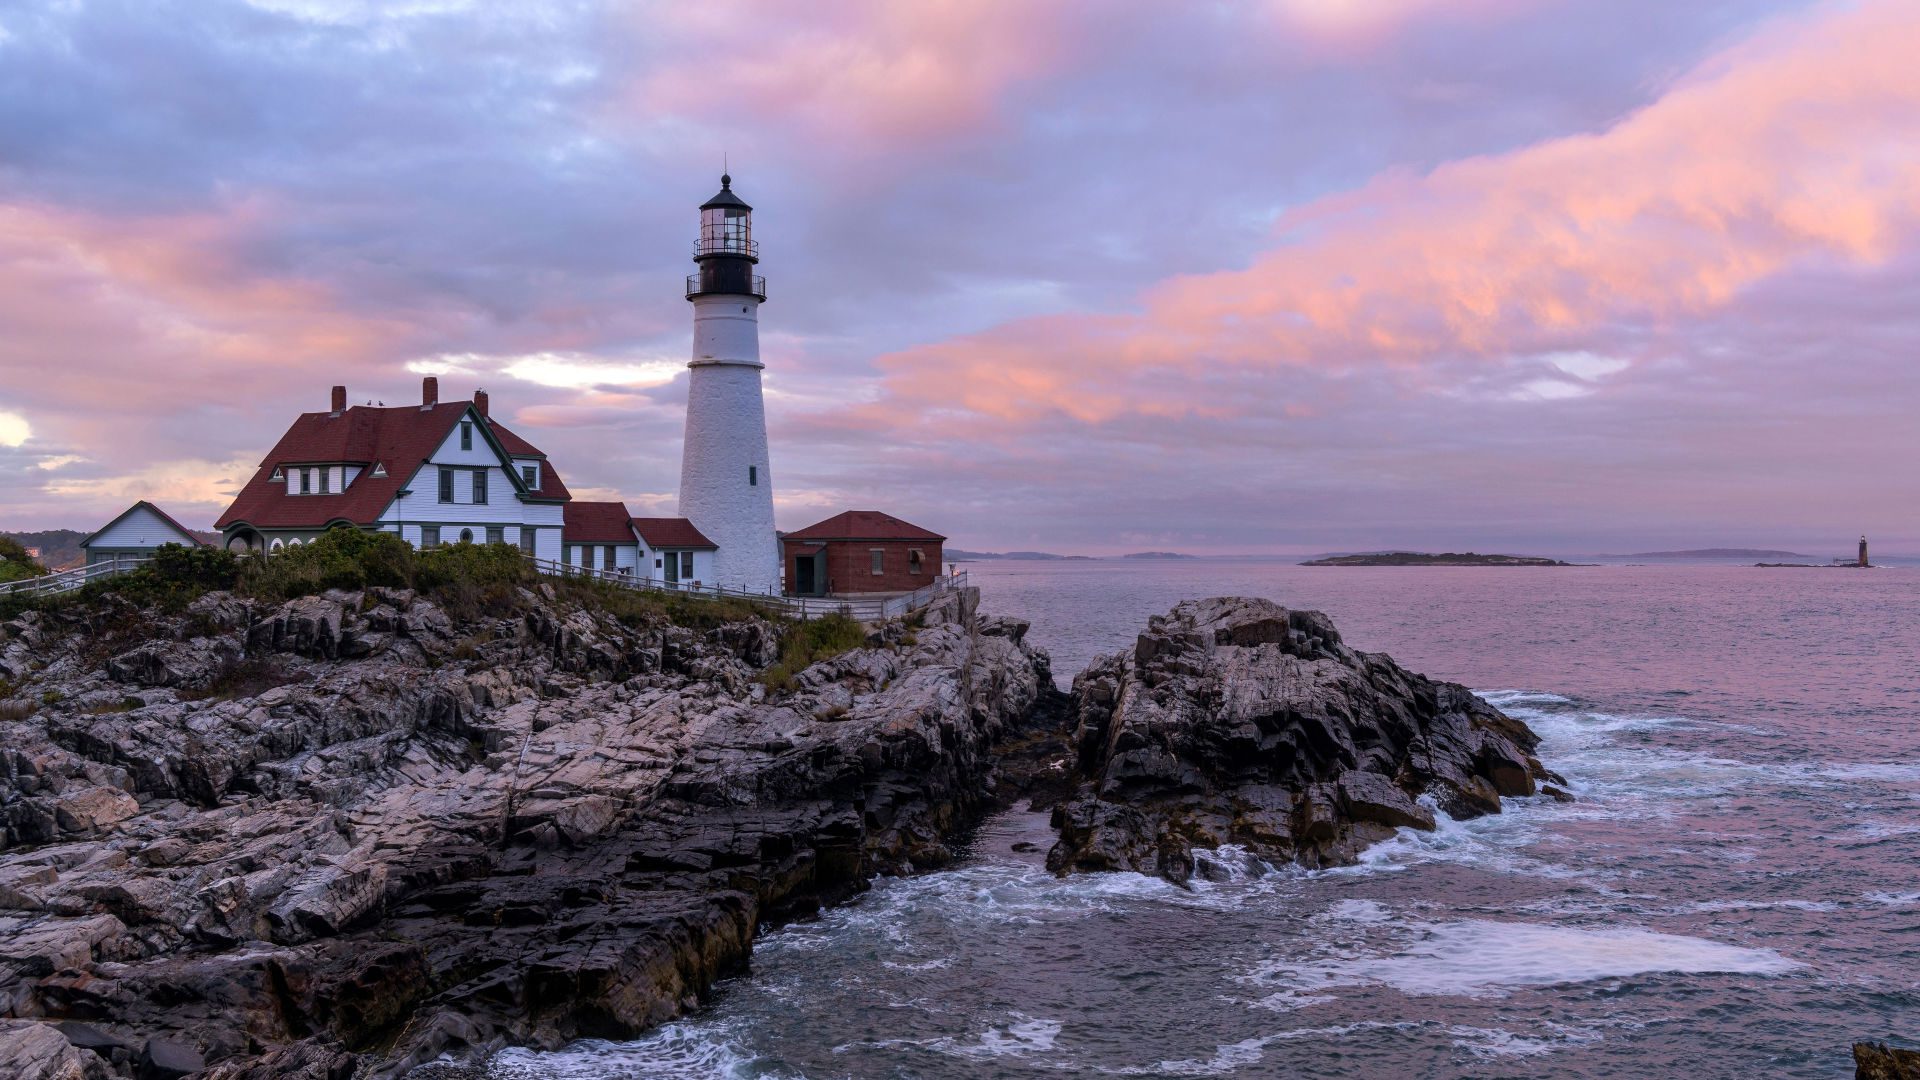 Porland, Maine lighthouse at sunset